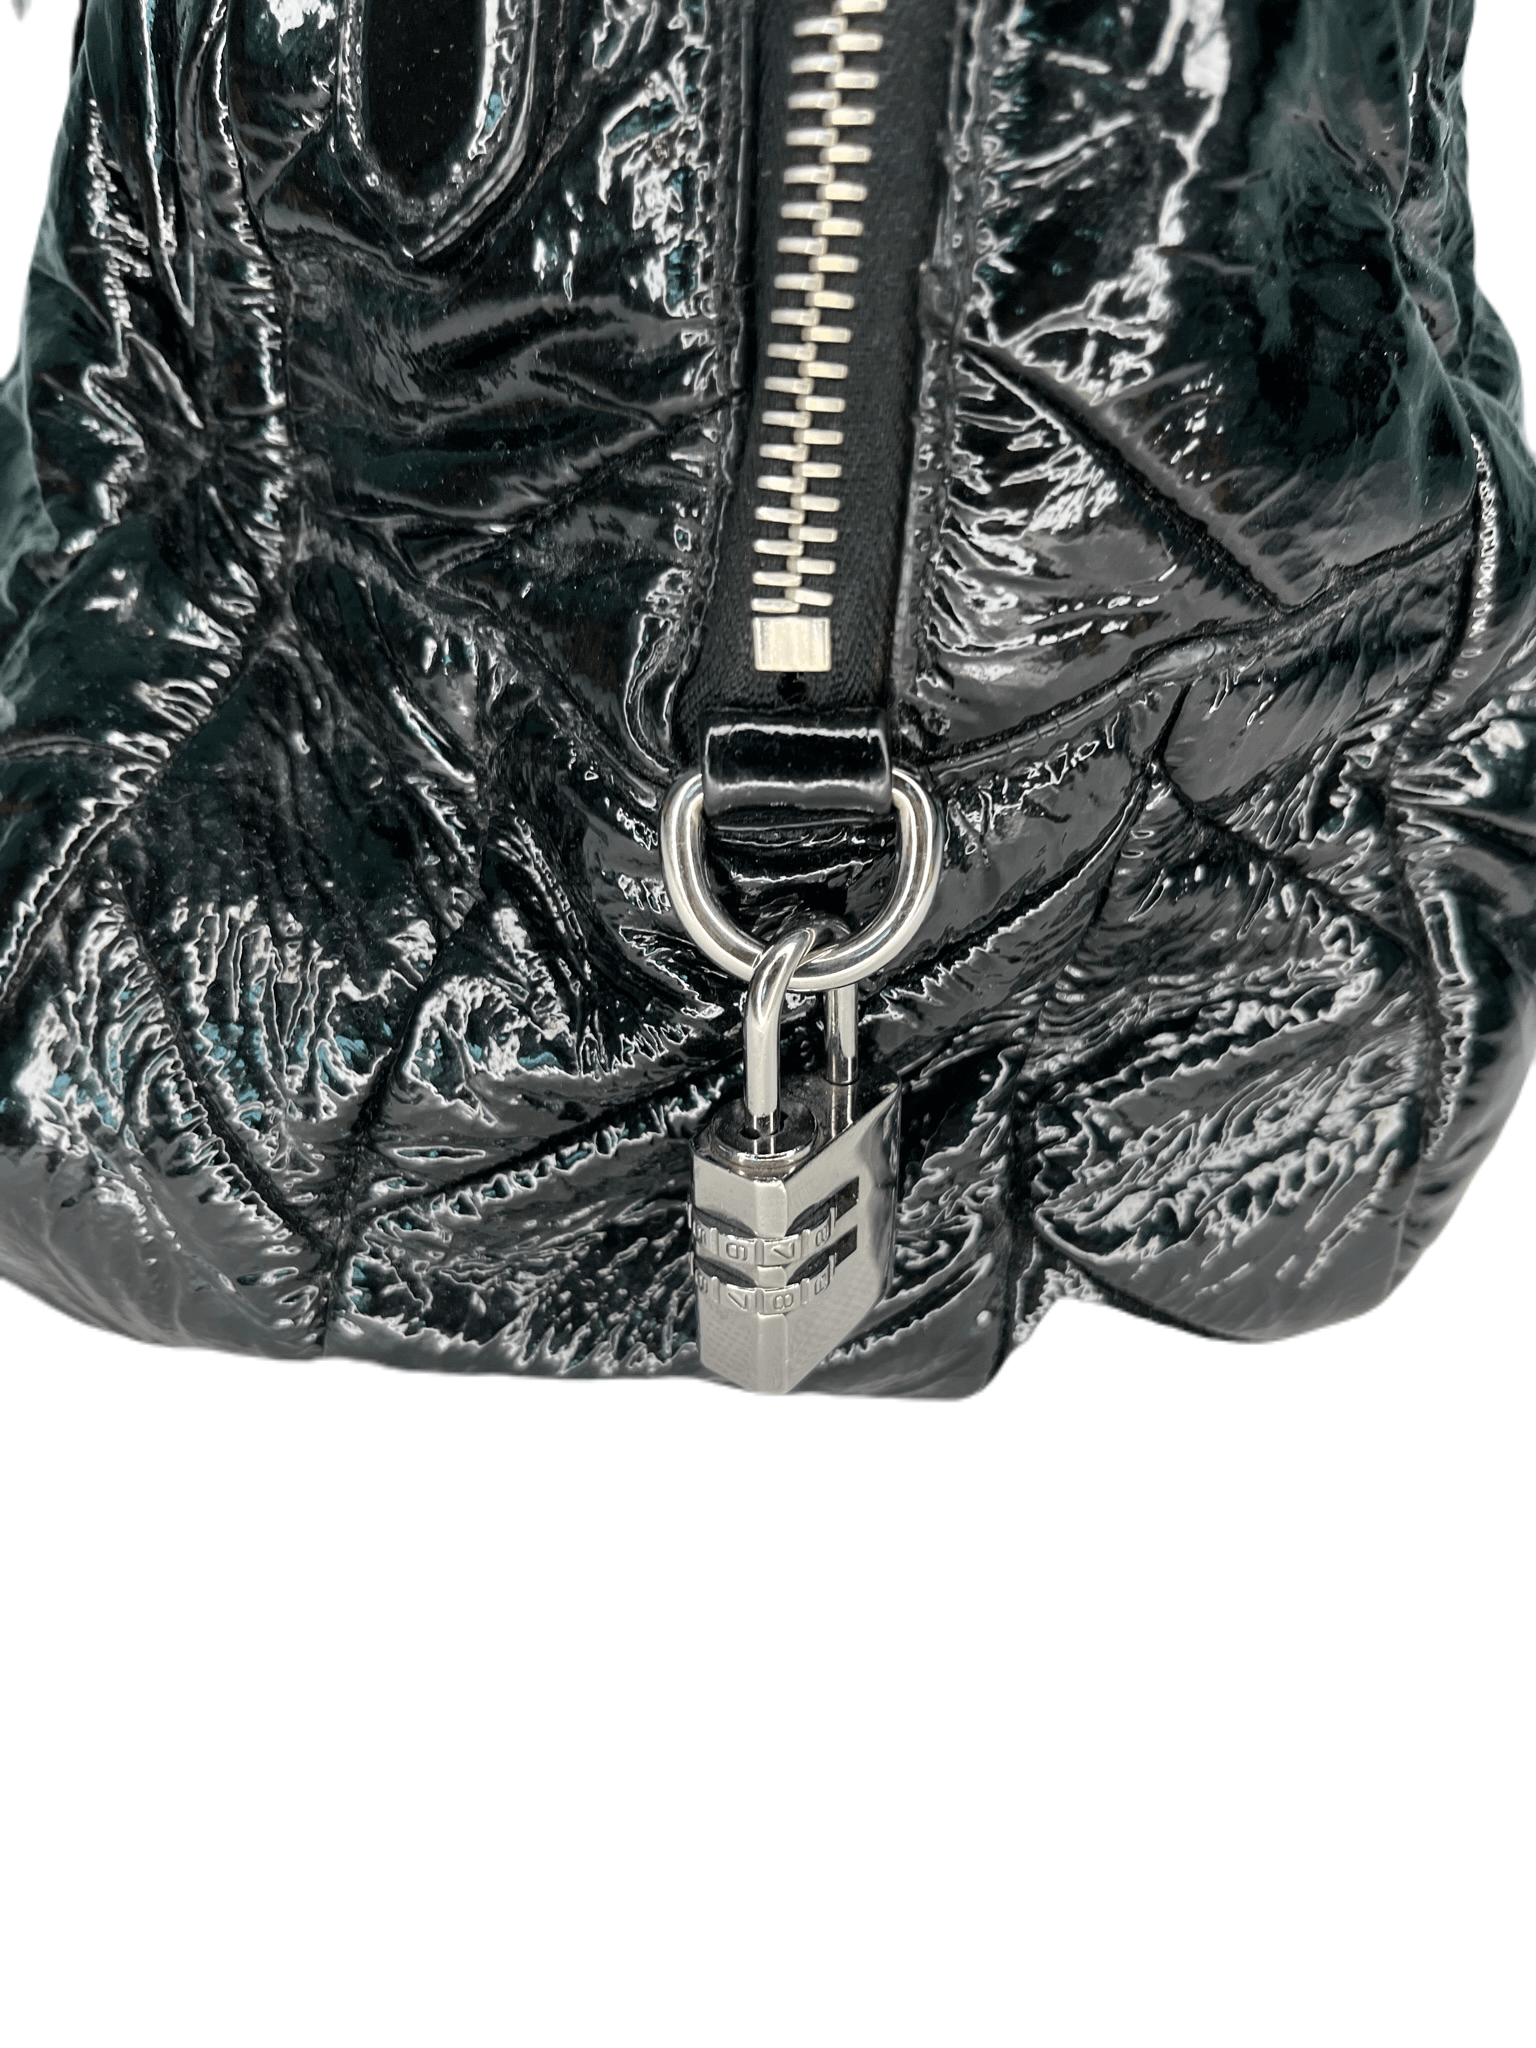 Black Patent Quilted Vernice Handbag - Endless